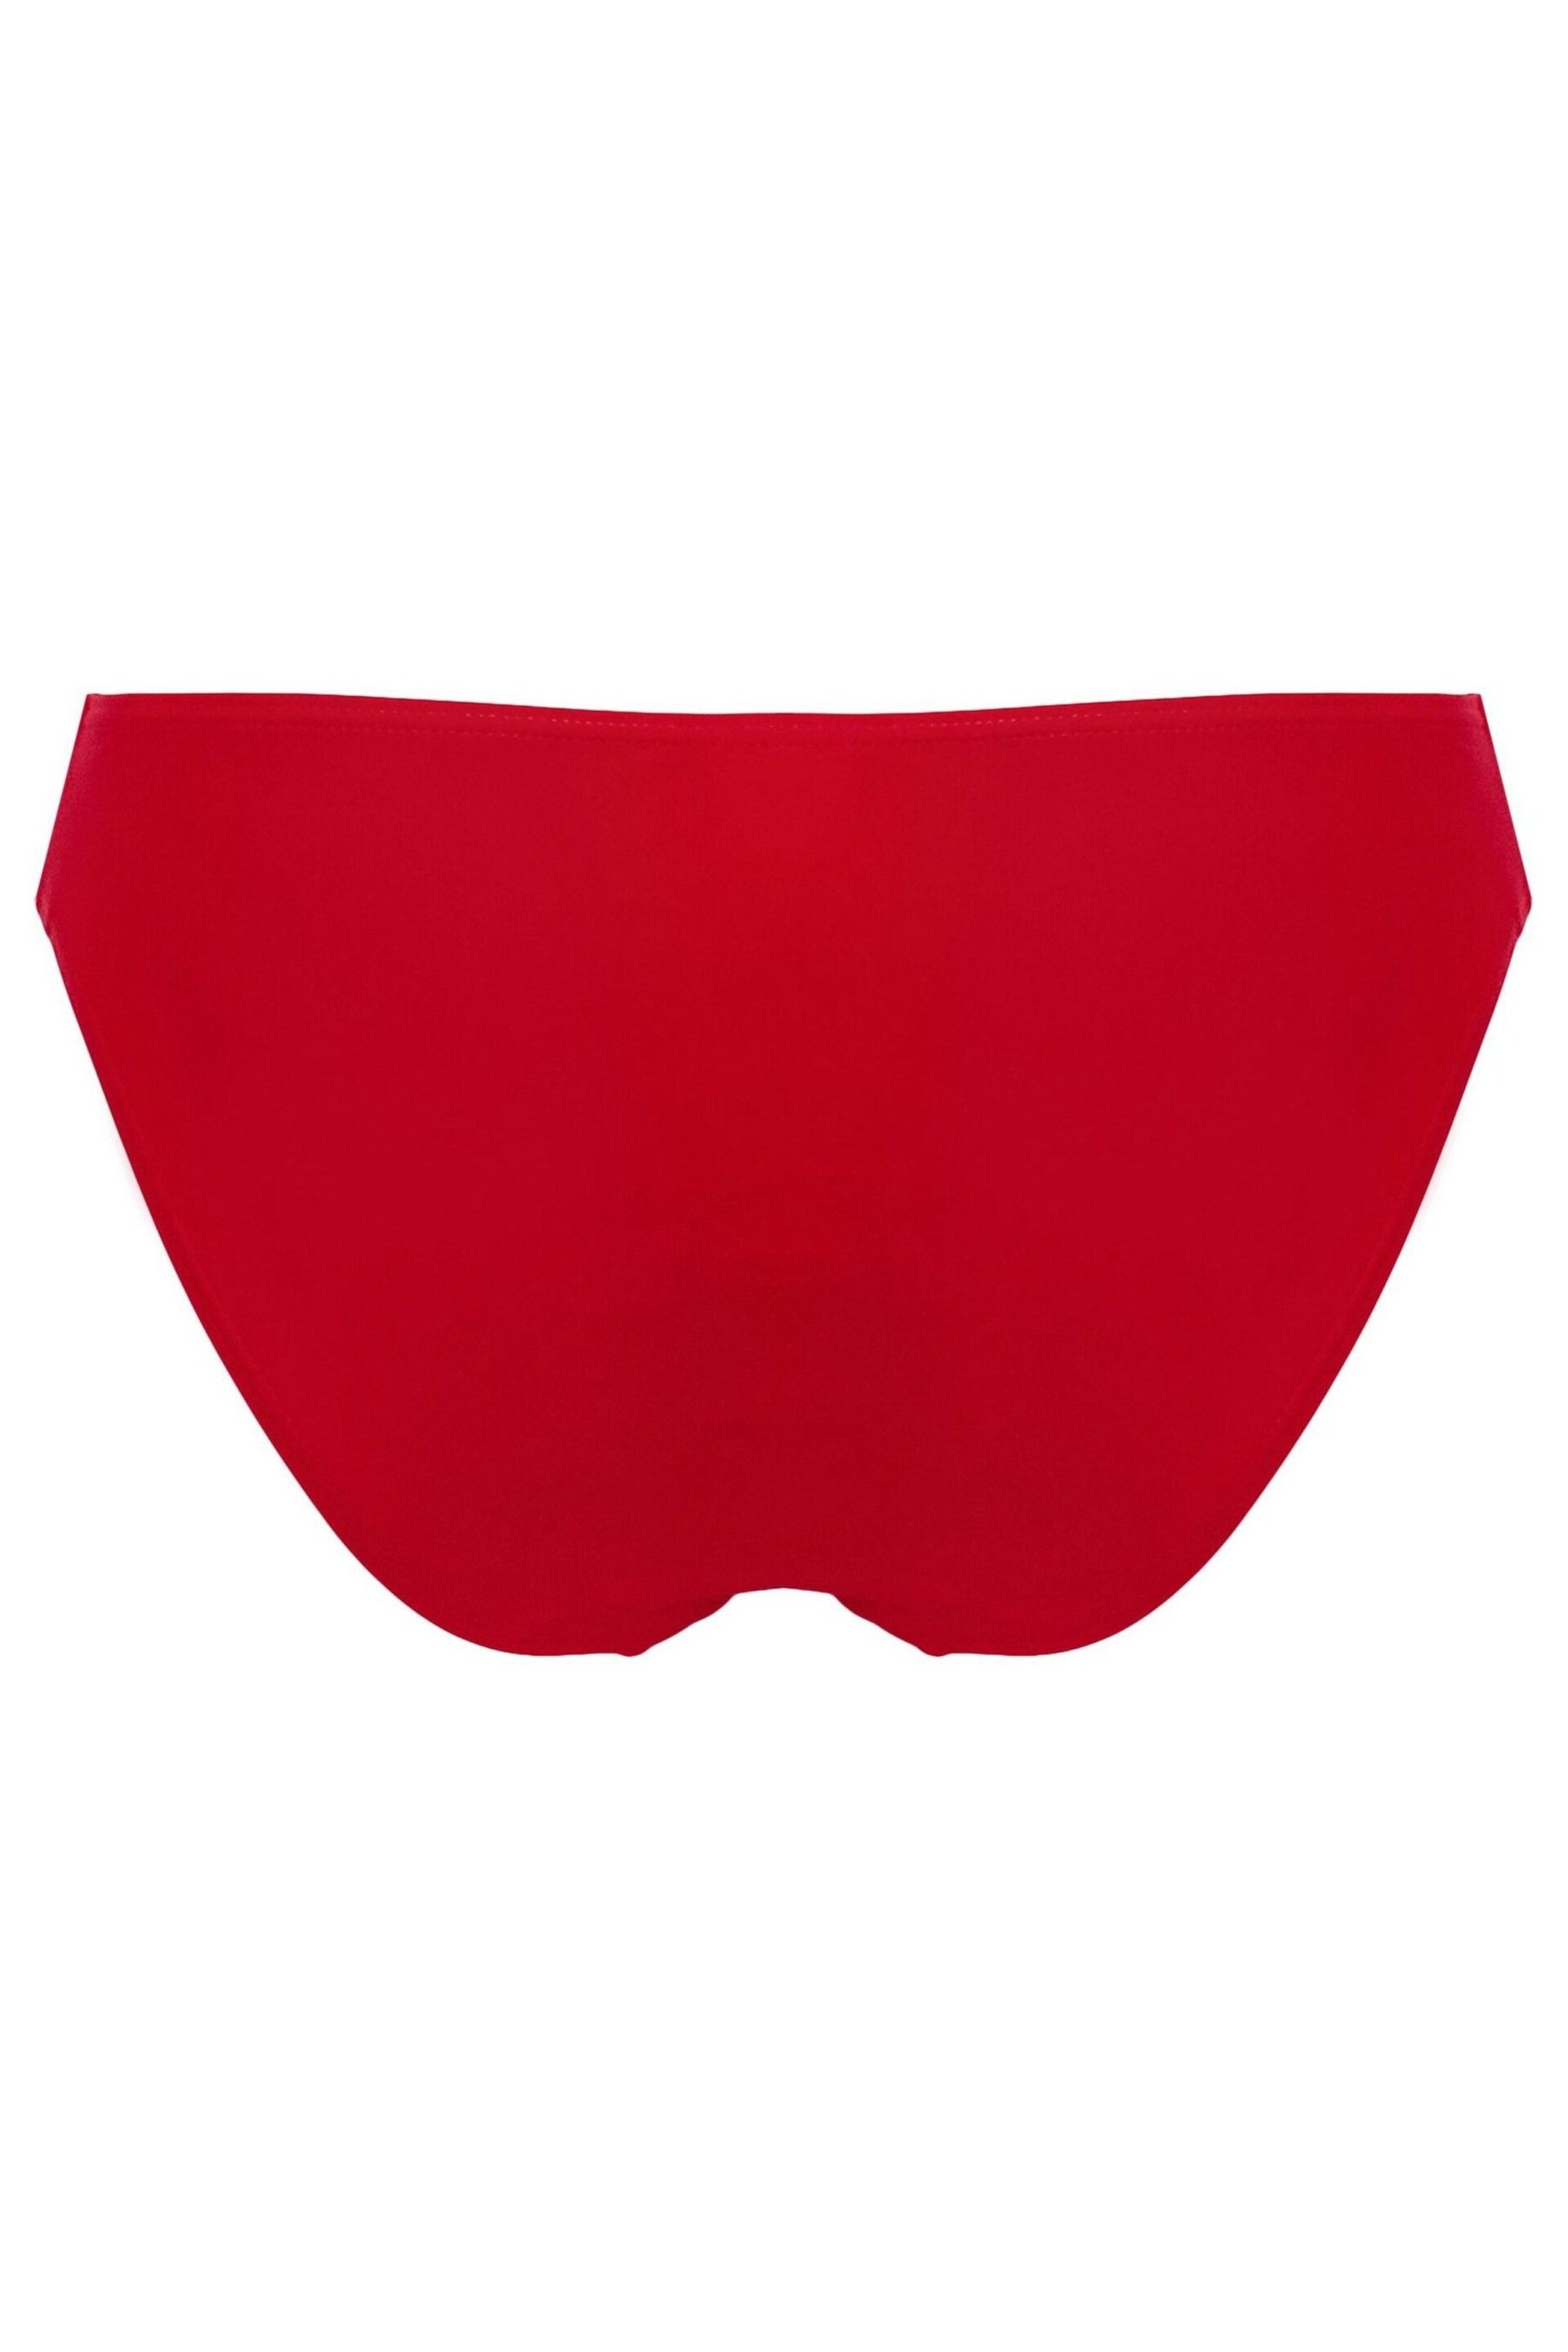 Pour Moi Red Free Spirit Frill Waist Bikini Briefs - Image 4 of 4